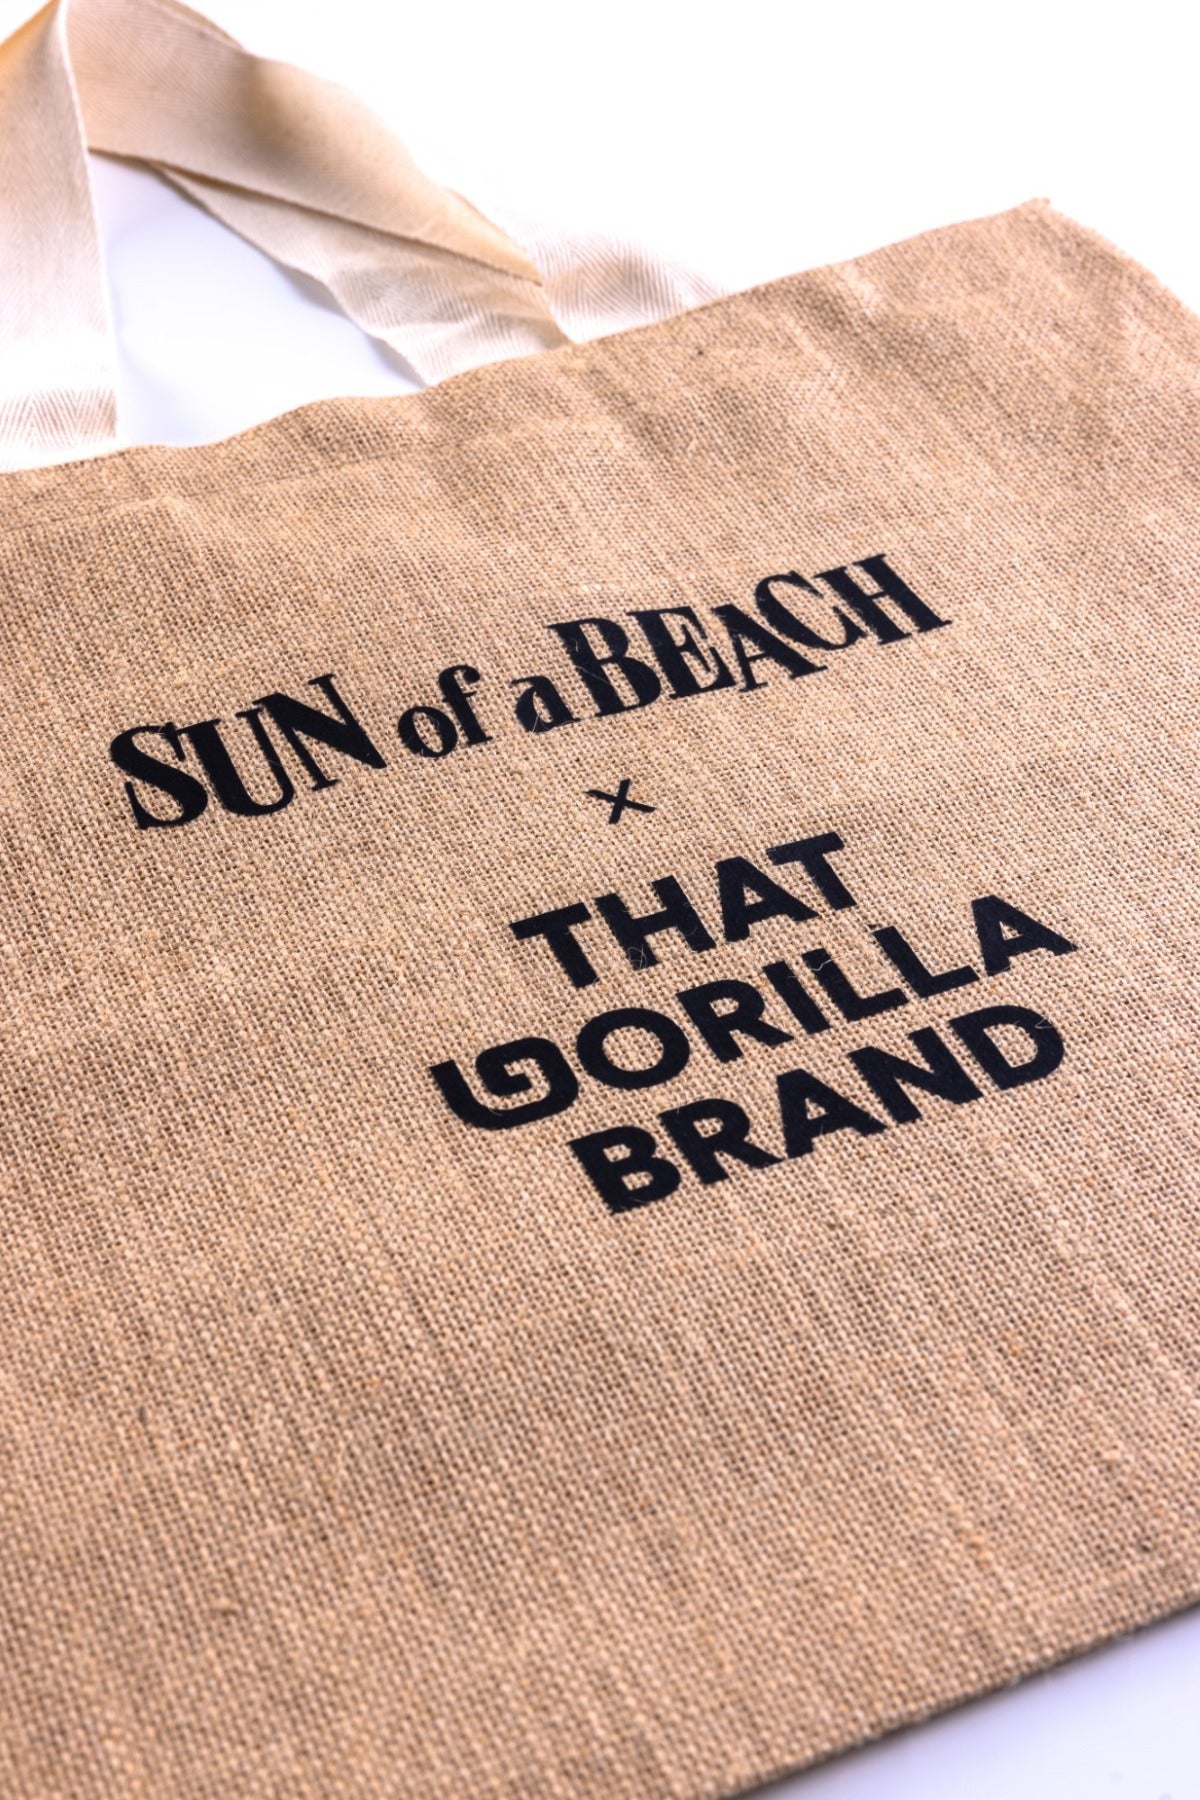 THAT GORILLA BRAND X SUN OF A BEACH BAG